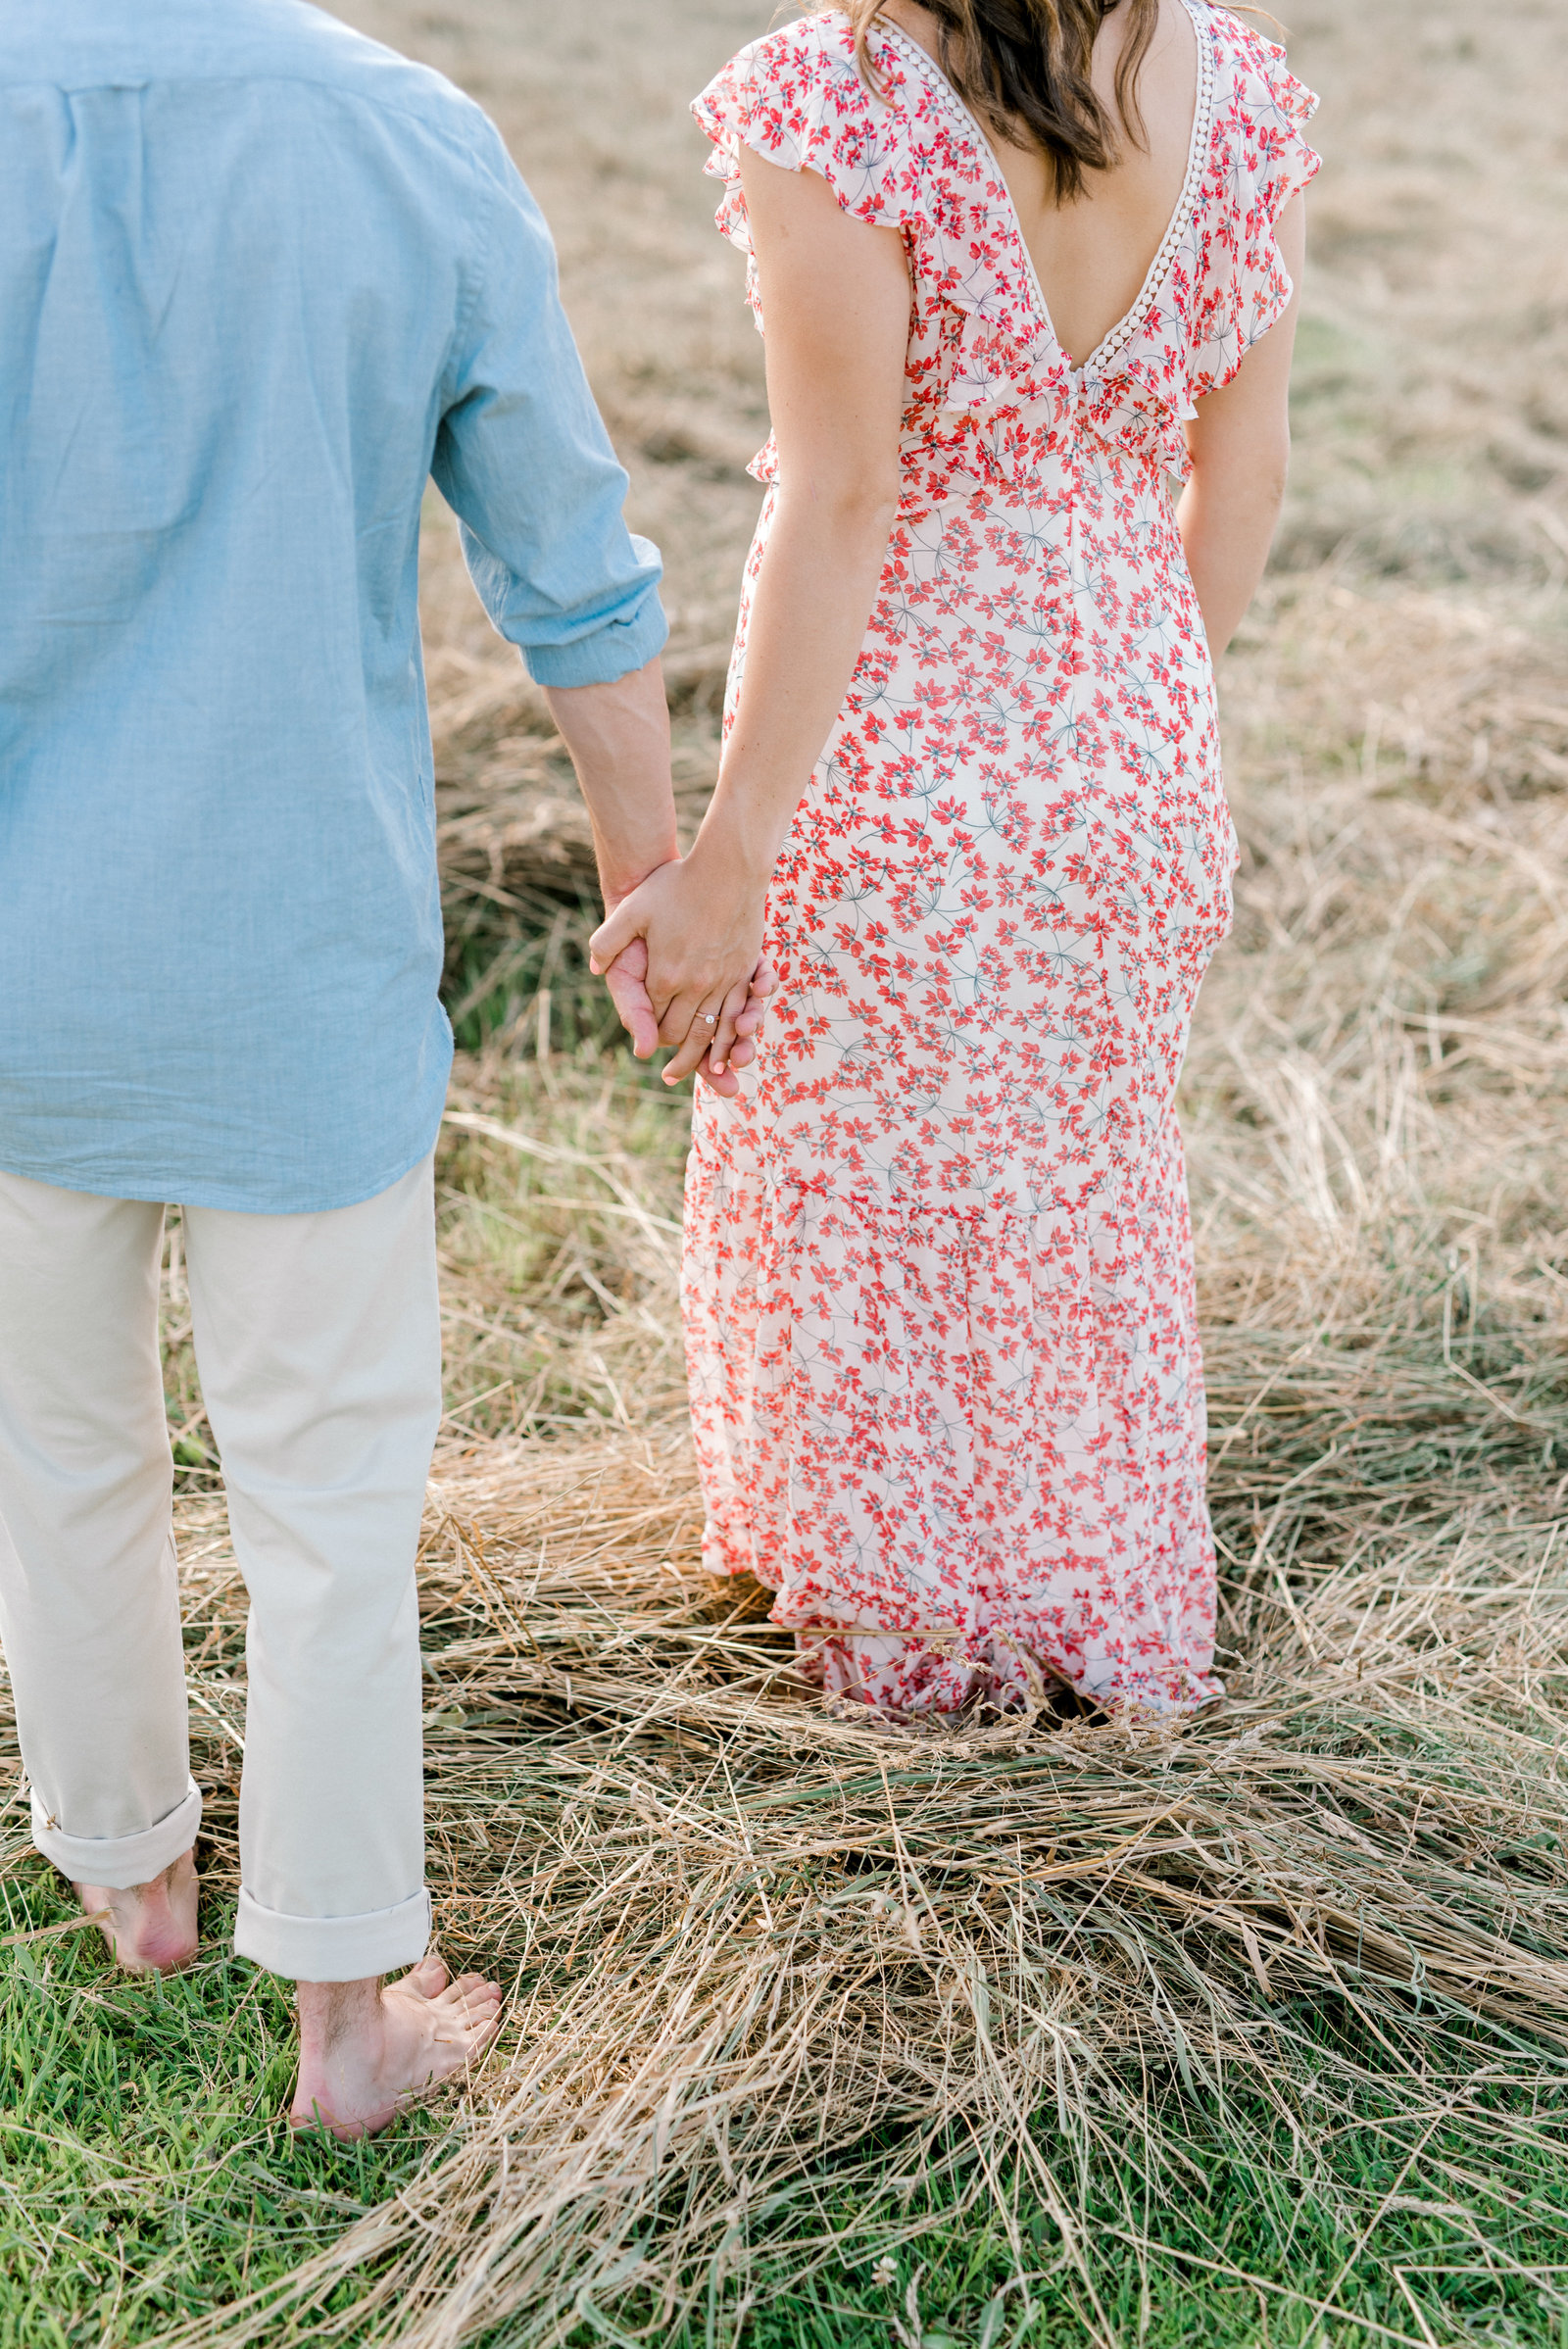 Erie Engagement Photographer- couple walking through a field